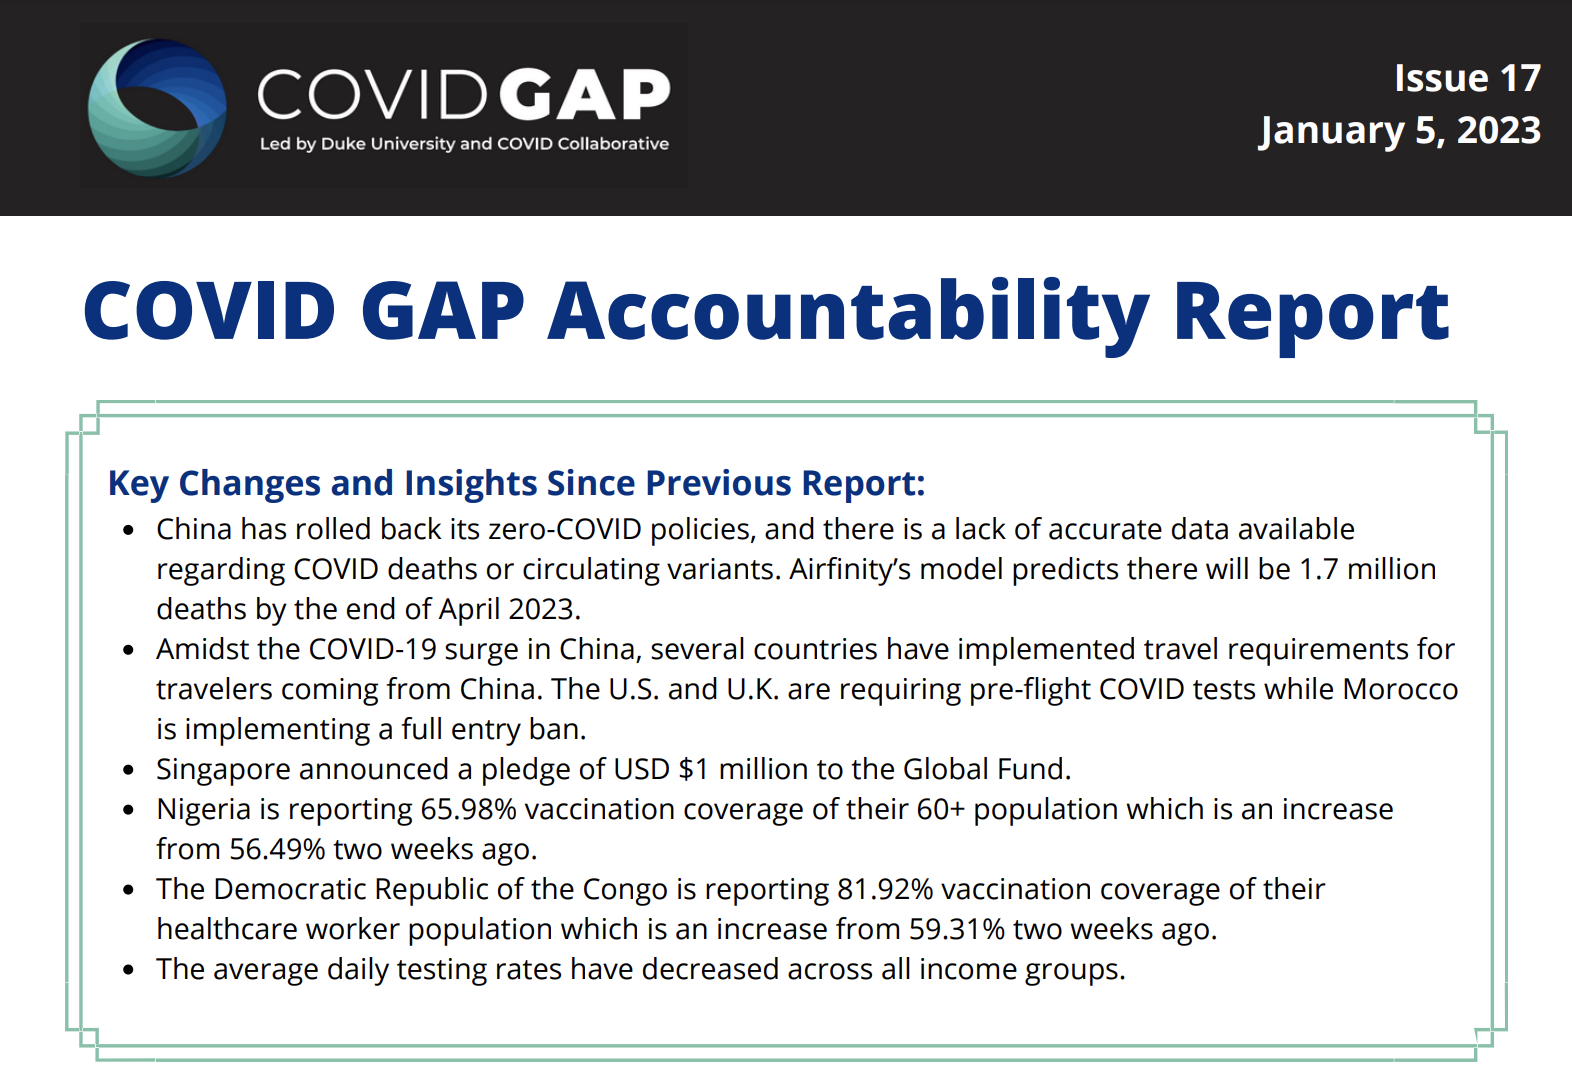 COVID GAP Accountability Report, Issue 17